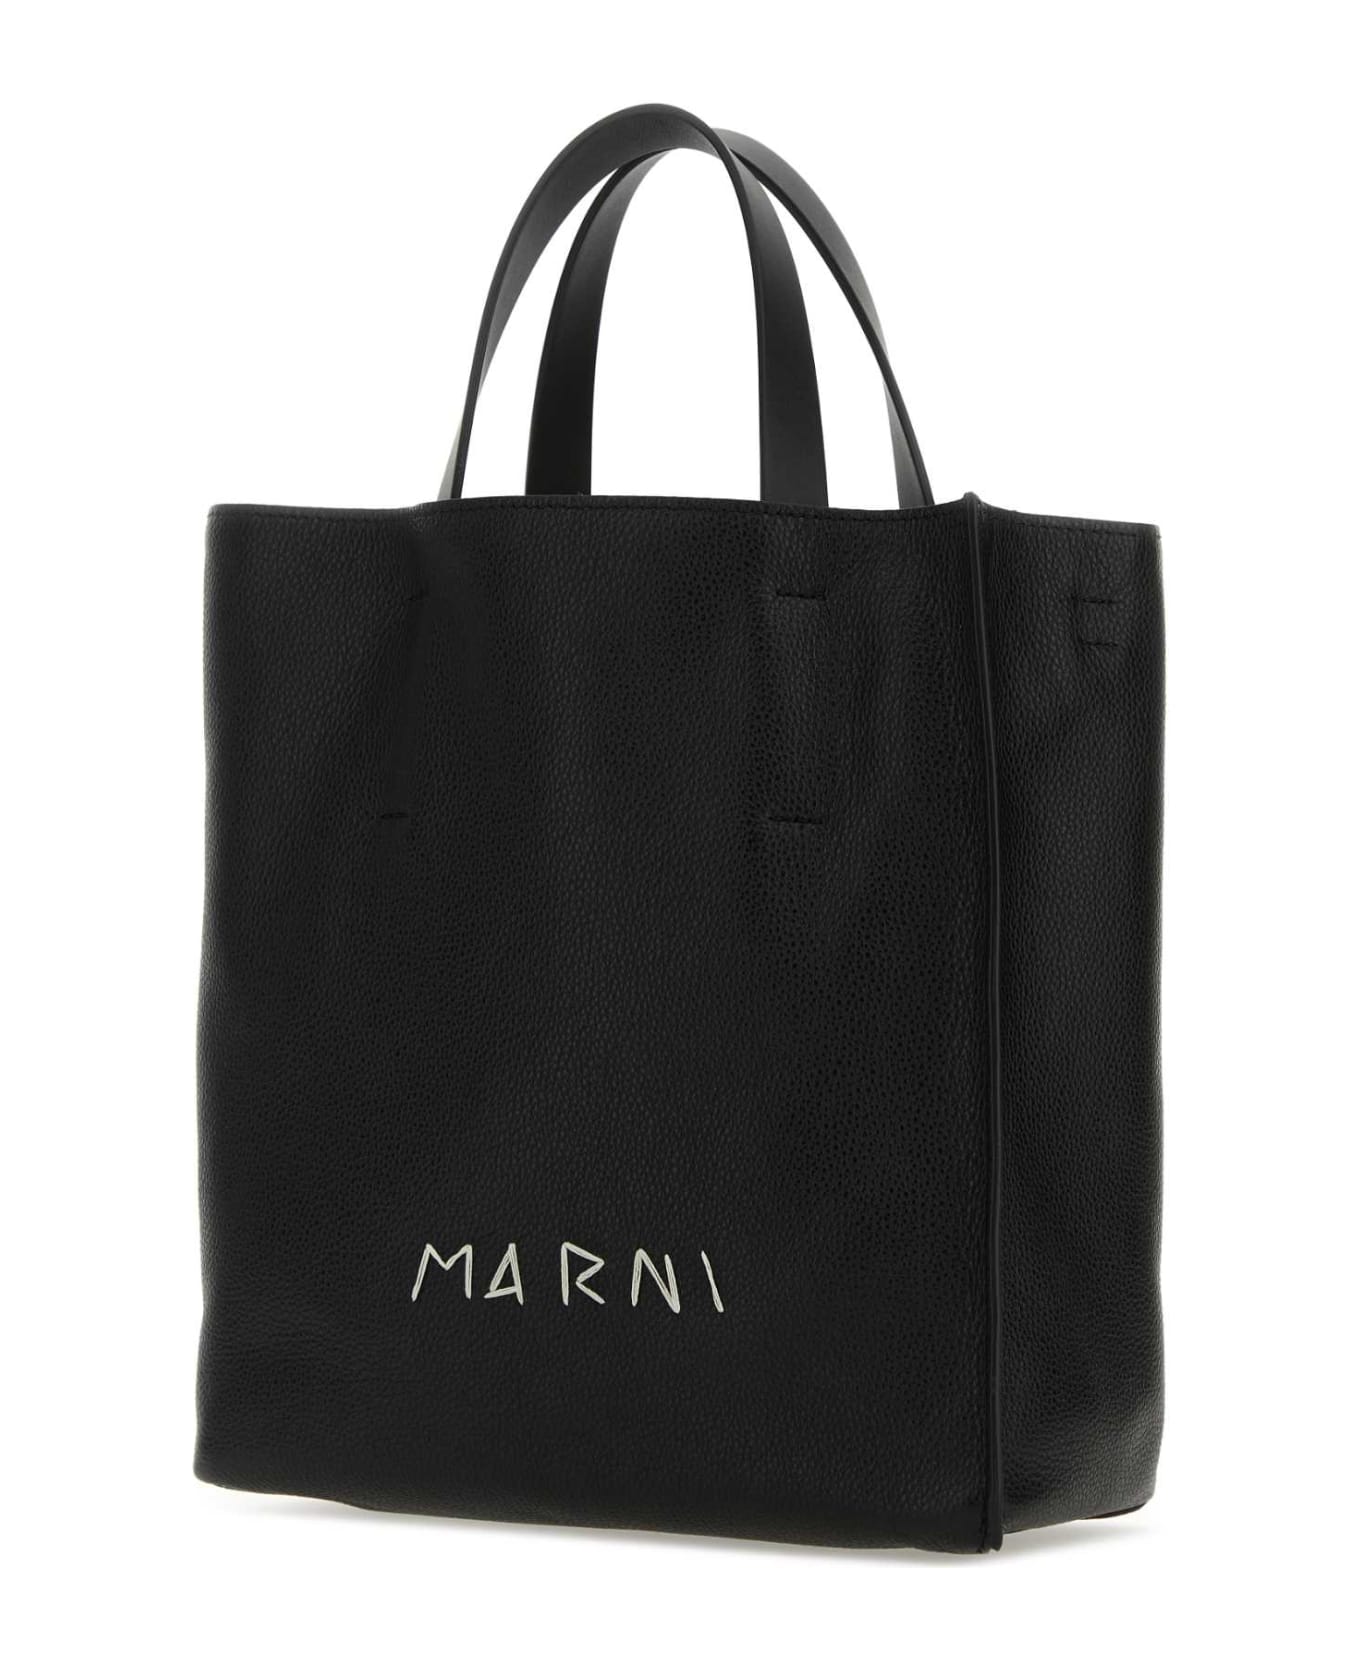 Marni Black Leather Small Museo Handbag - 00N99 バッグ